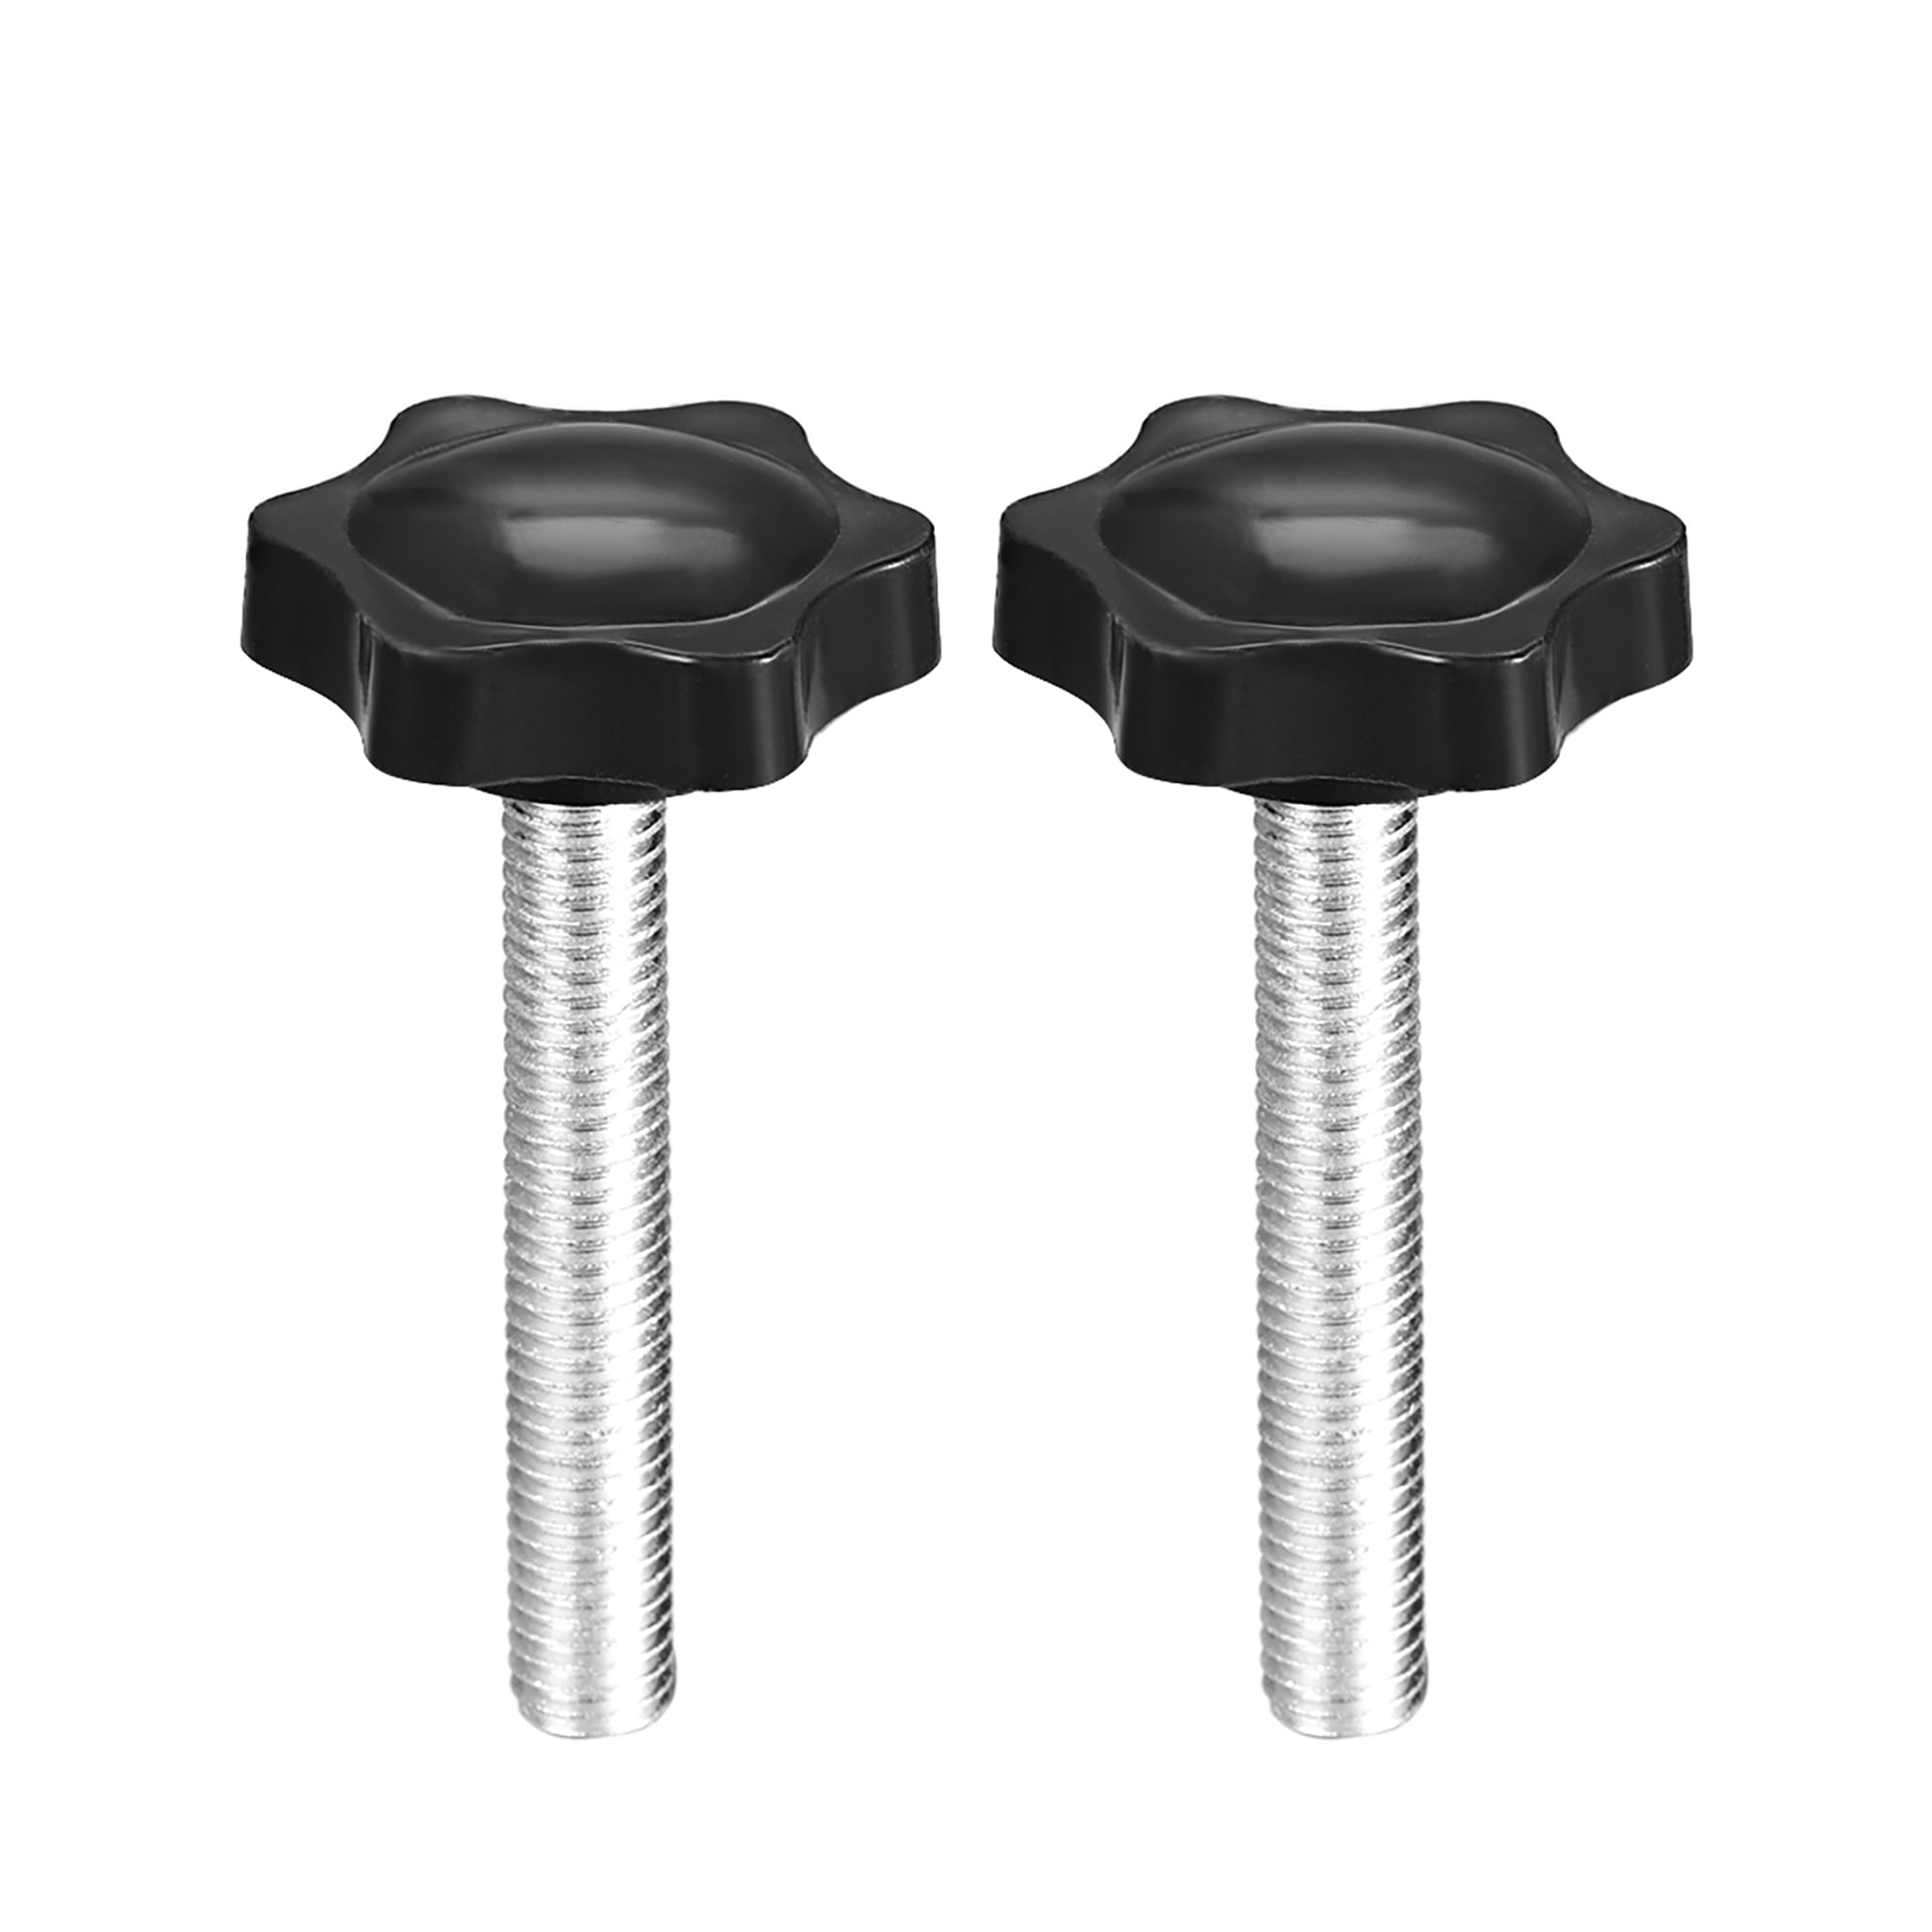 5 pieces plum hexagon handles 48 mm in diameter M8 × 40 mm star knob Male thread clamping screw knob 